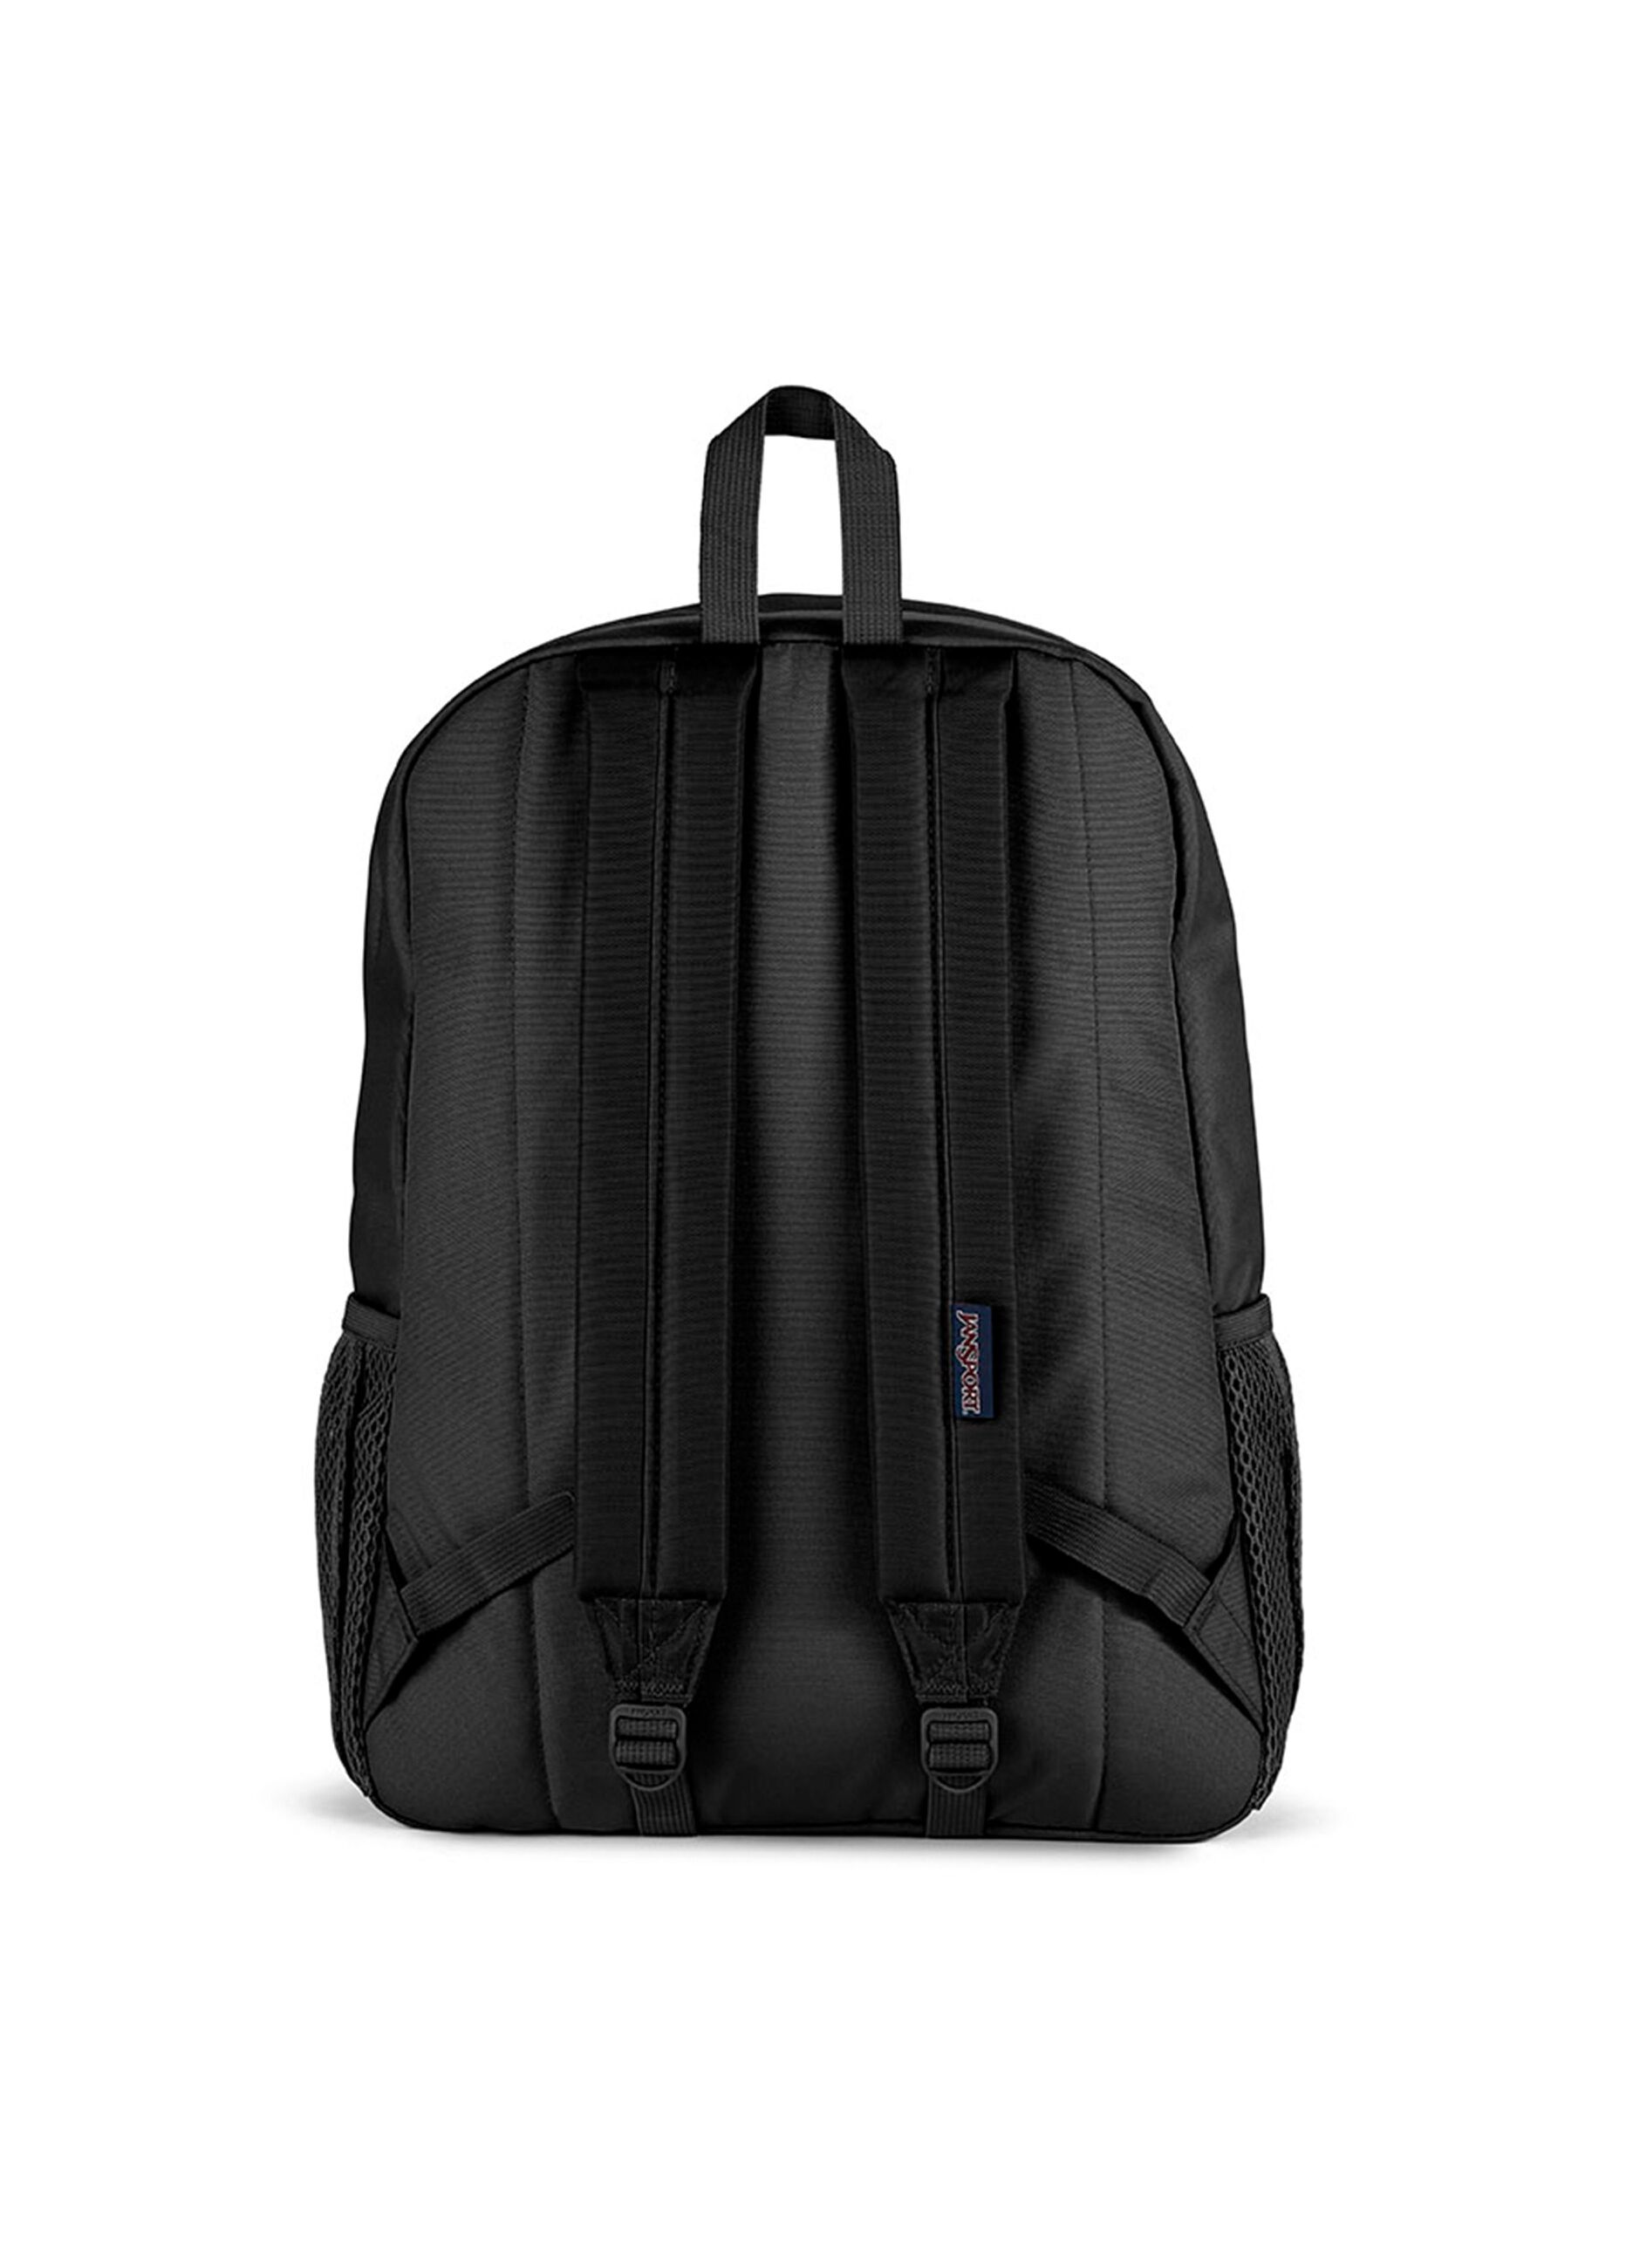 Jansport Union Pack backpack